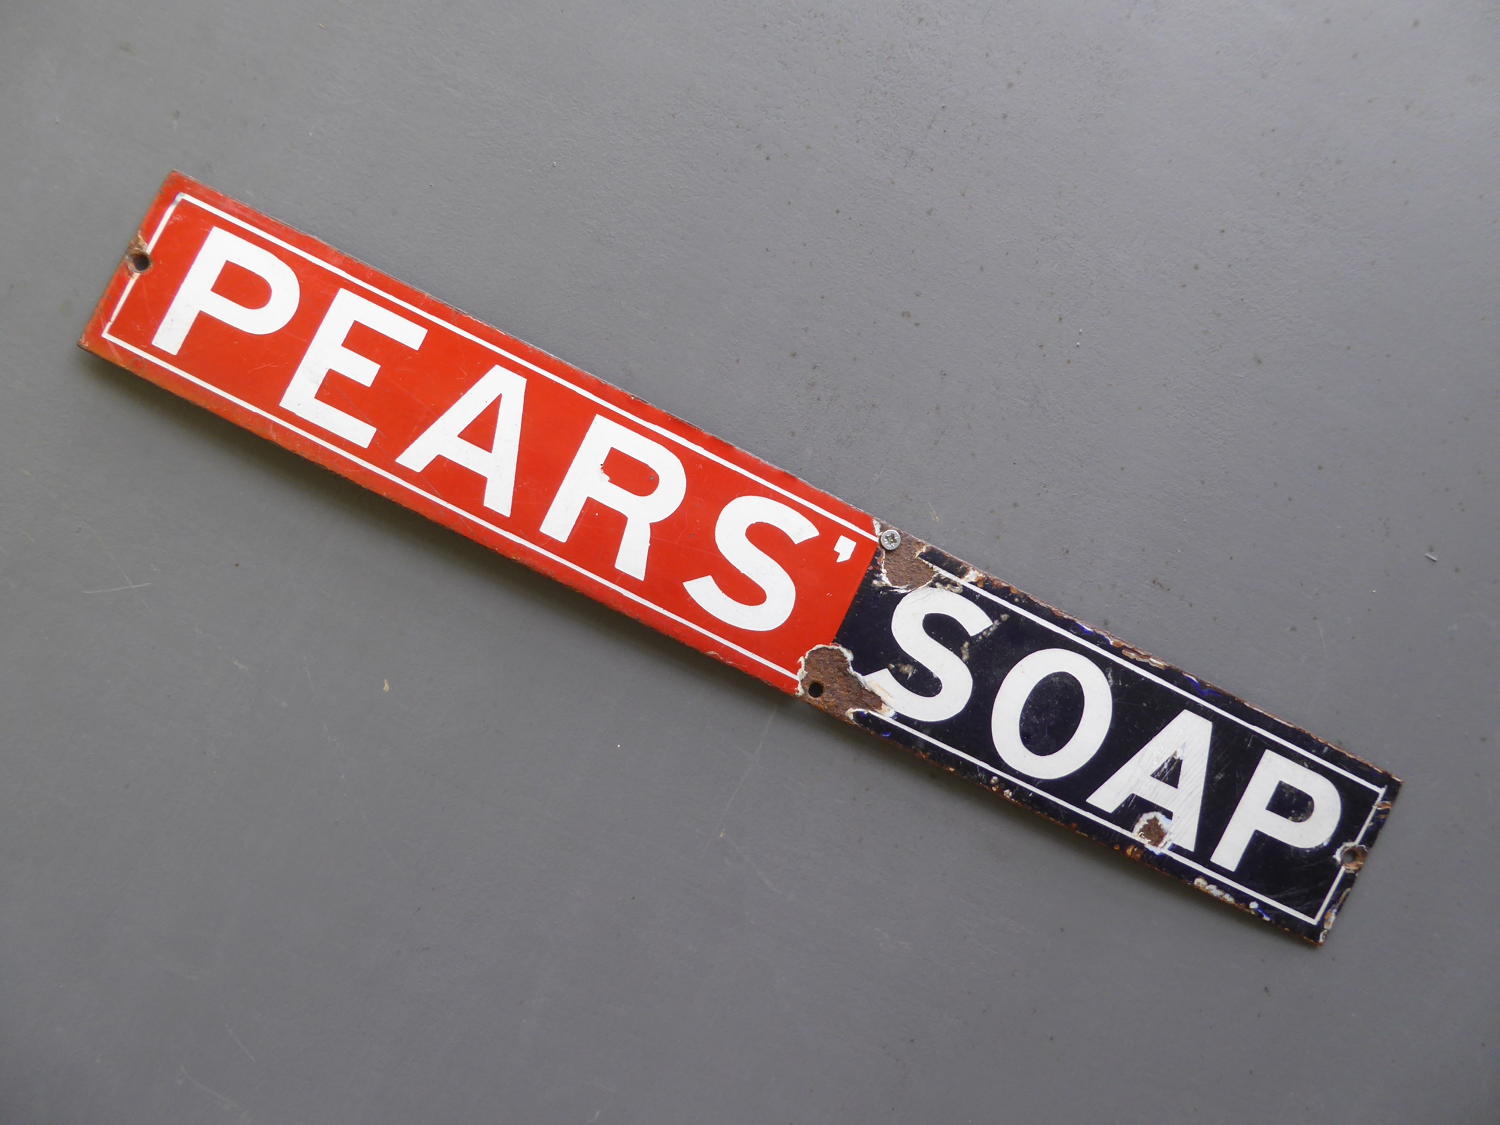 Pears Soap 'Bus Seat' Enamel Sign